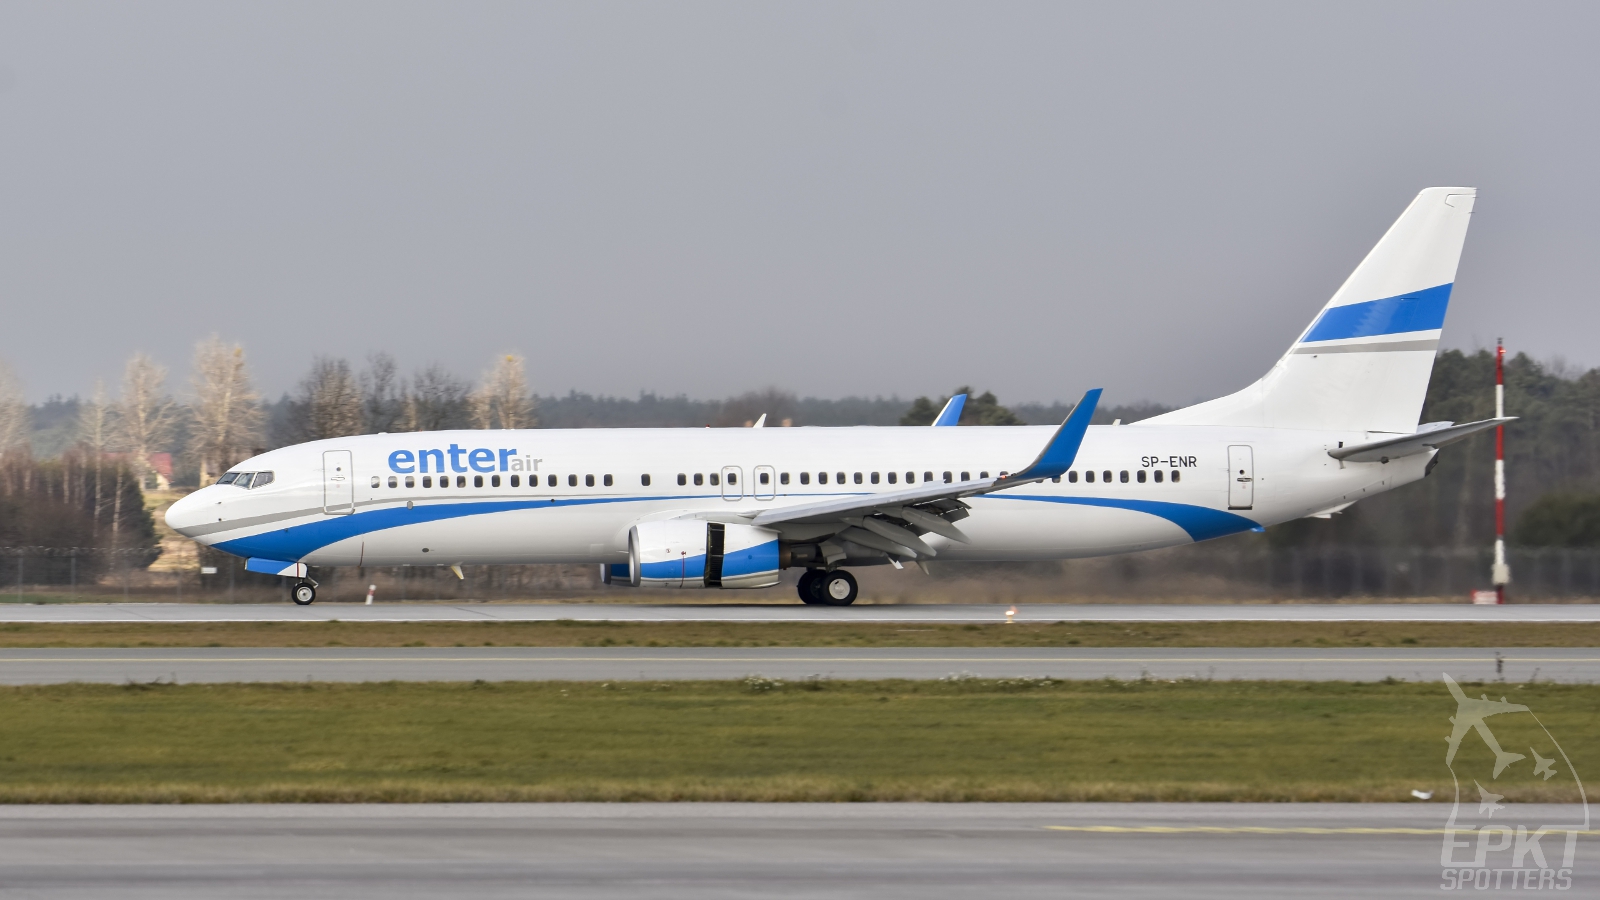 SP-ENR - Boeing 737 -8Q8 (EnterAir) / Pyrzowice - Katowice Poland [EPKT/KTW]